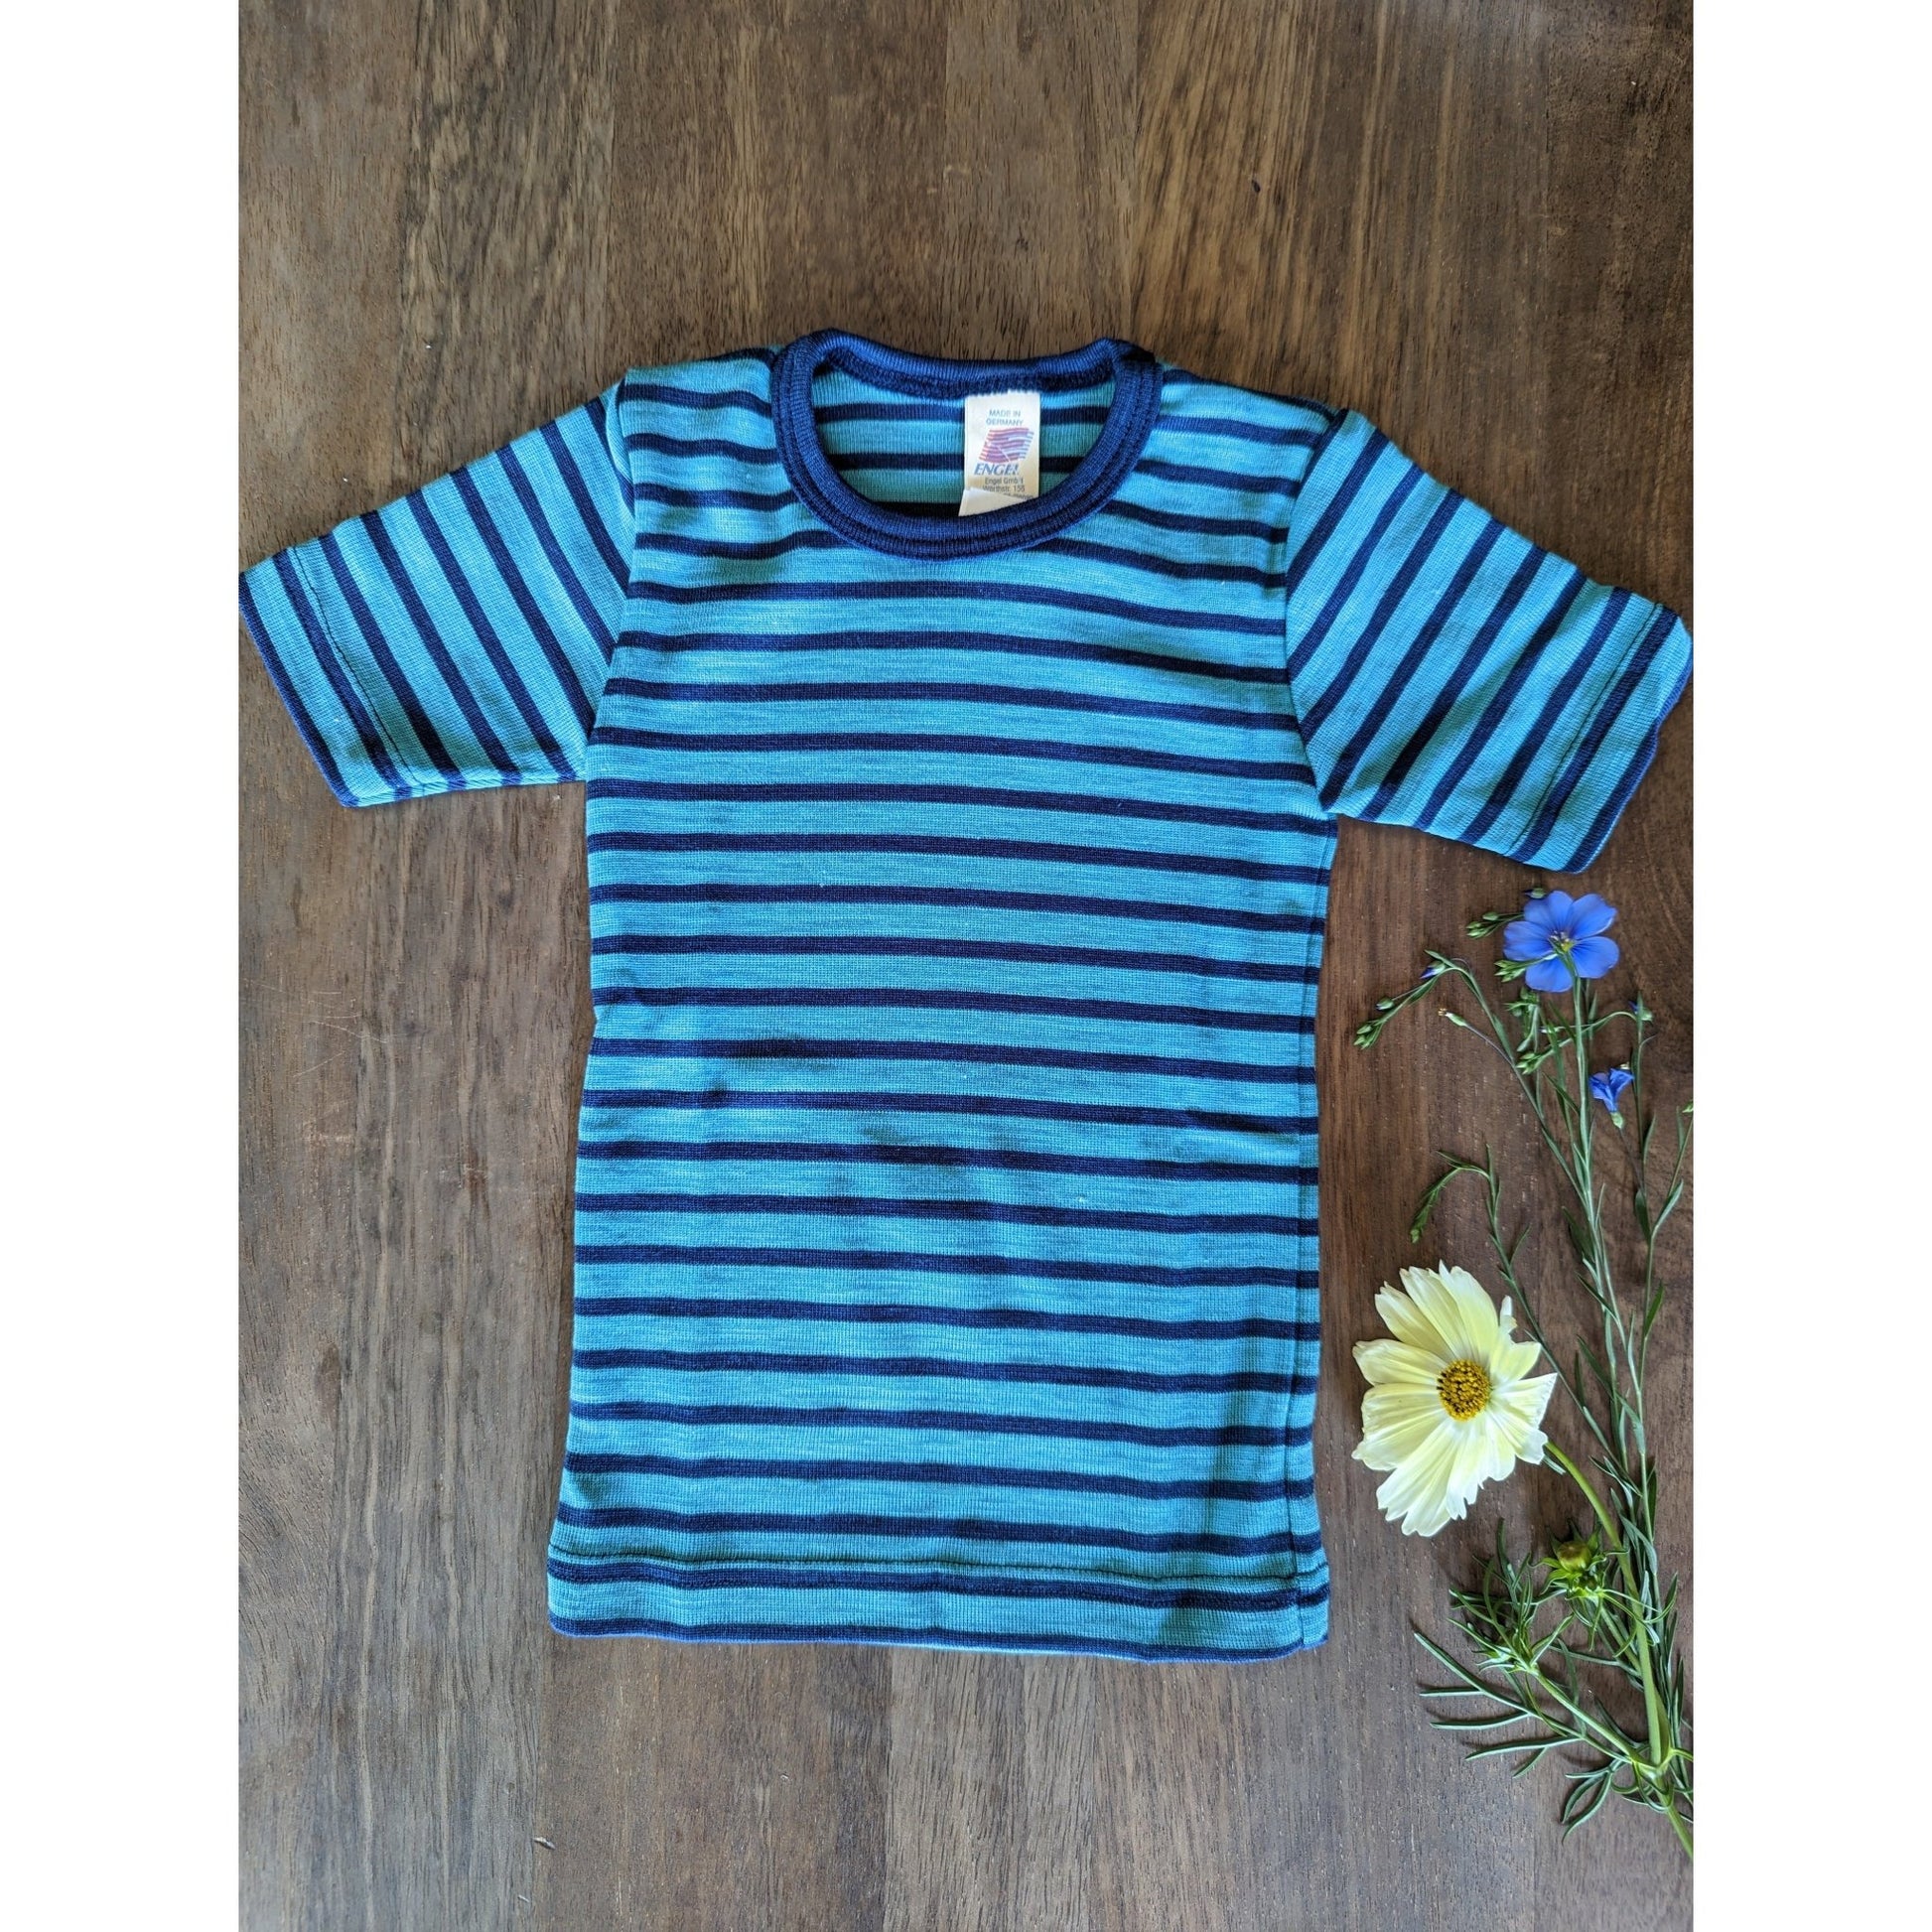 Engel - Organic Merino Wool Silk T-Shirt for Kids - Stripes - Nature's Wild Child